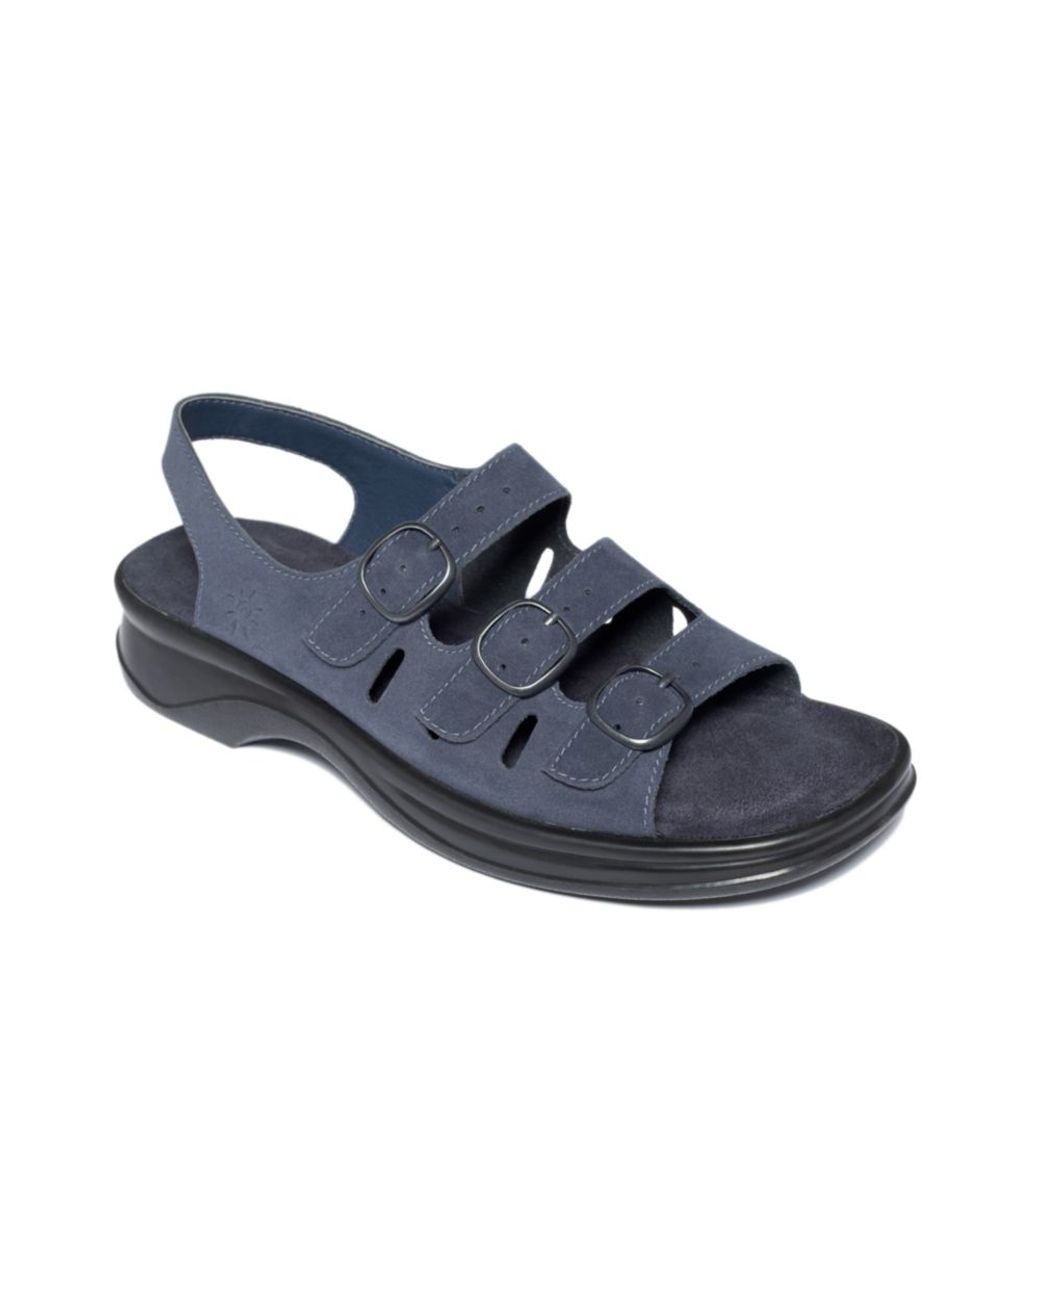 Clarks Sunbeat Sandals Blue